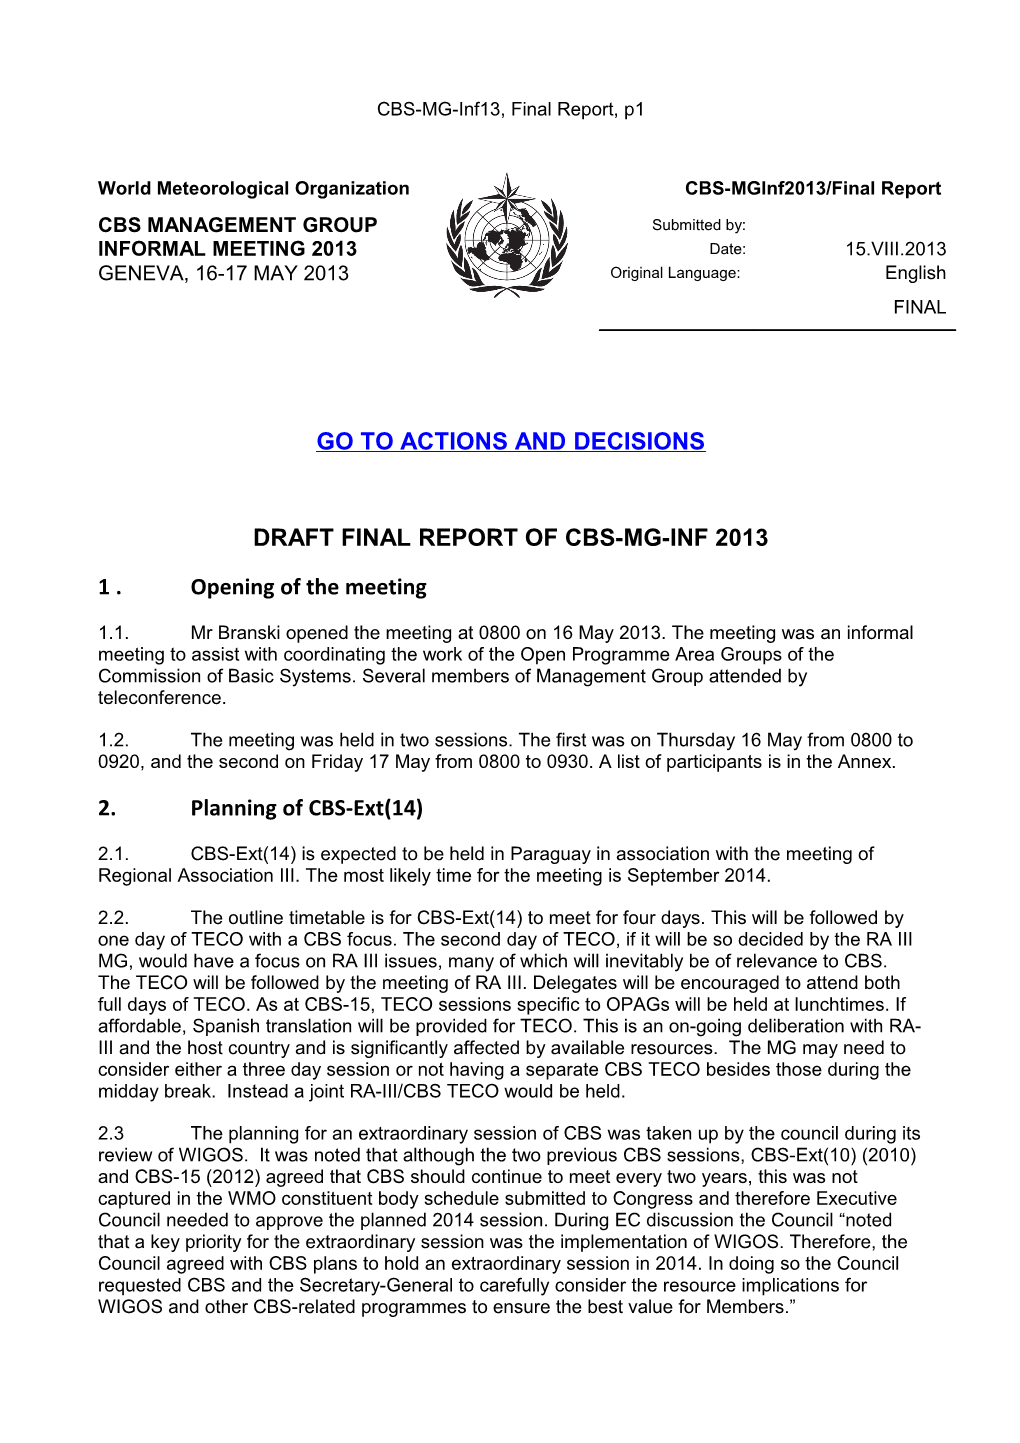 Draft Final Report of CBS-MG-Inf 2013